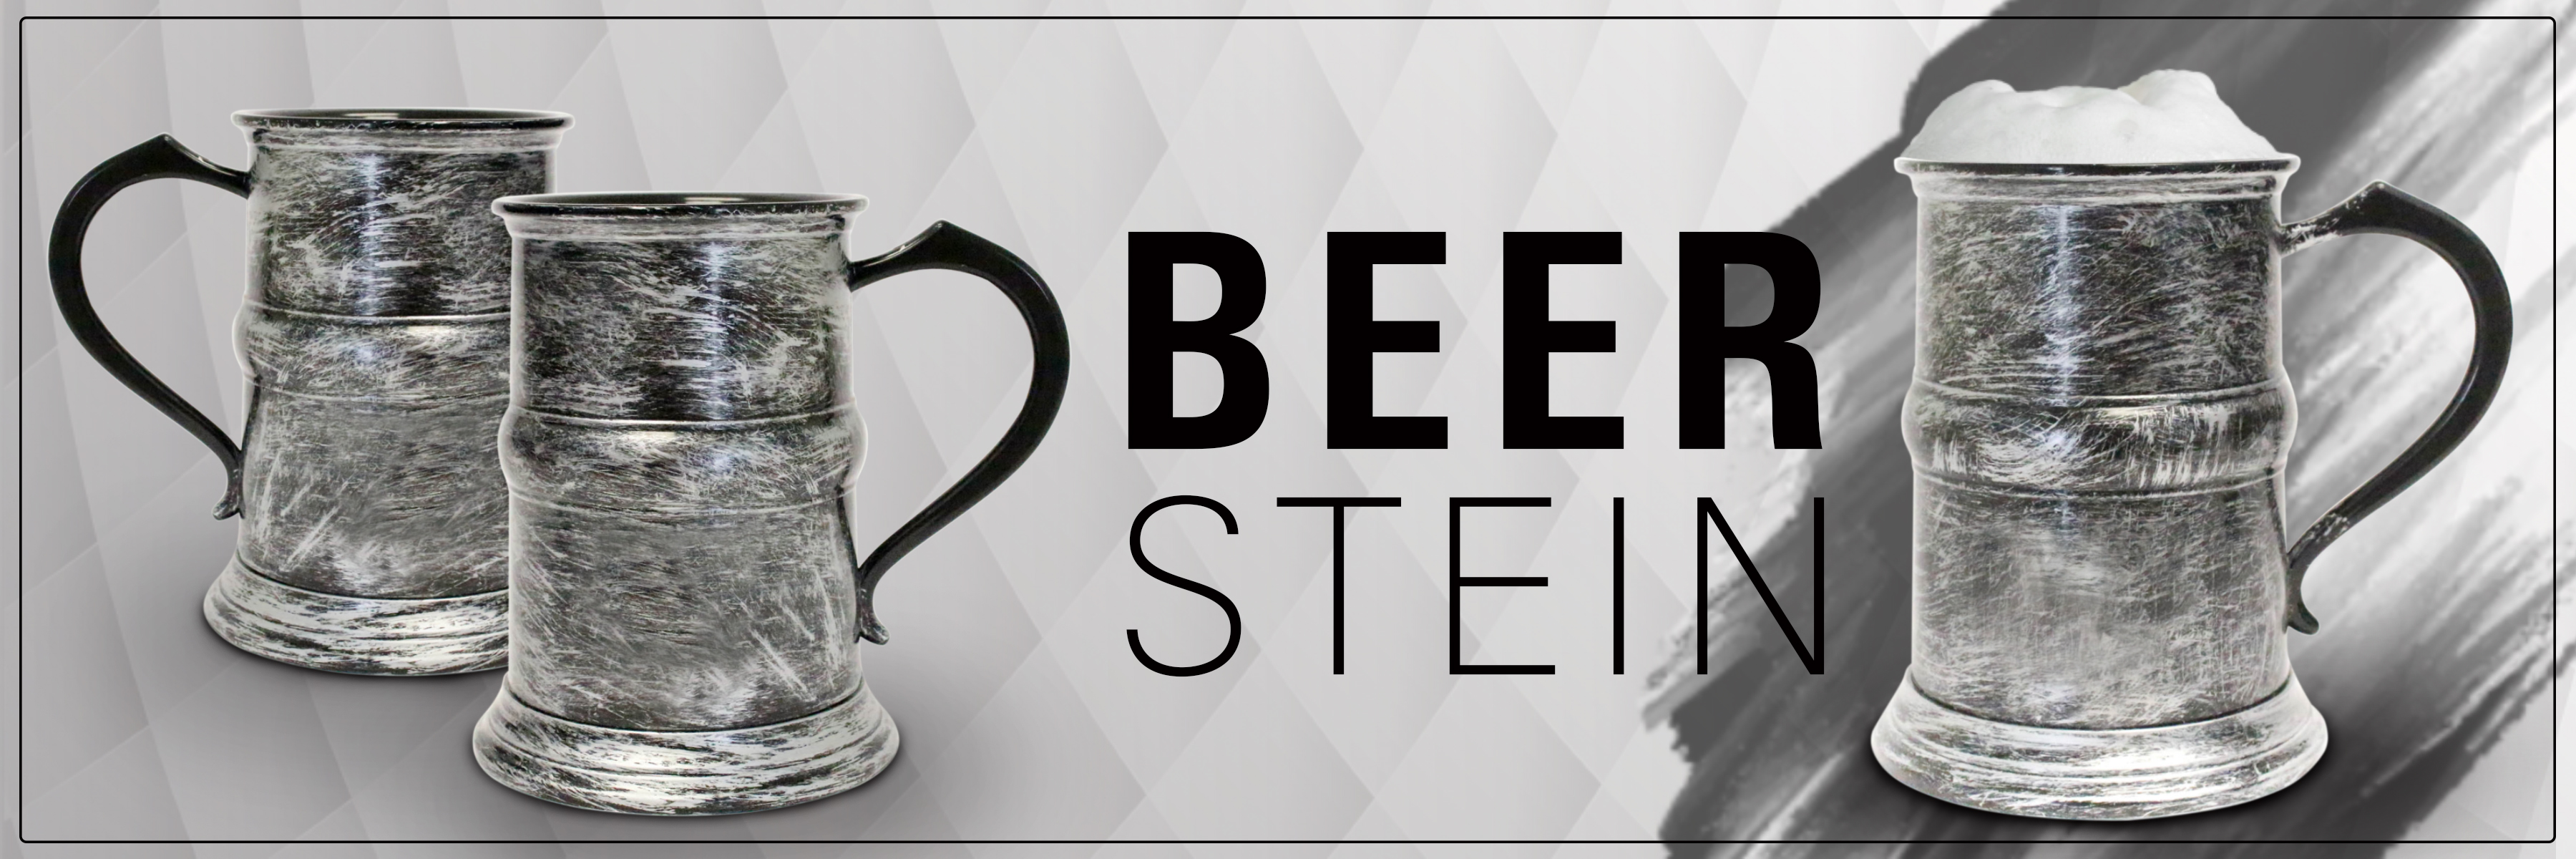 Bluetooth Speaker Beer Stein